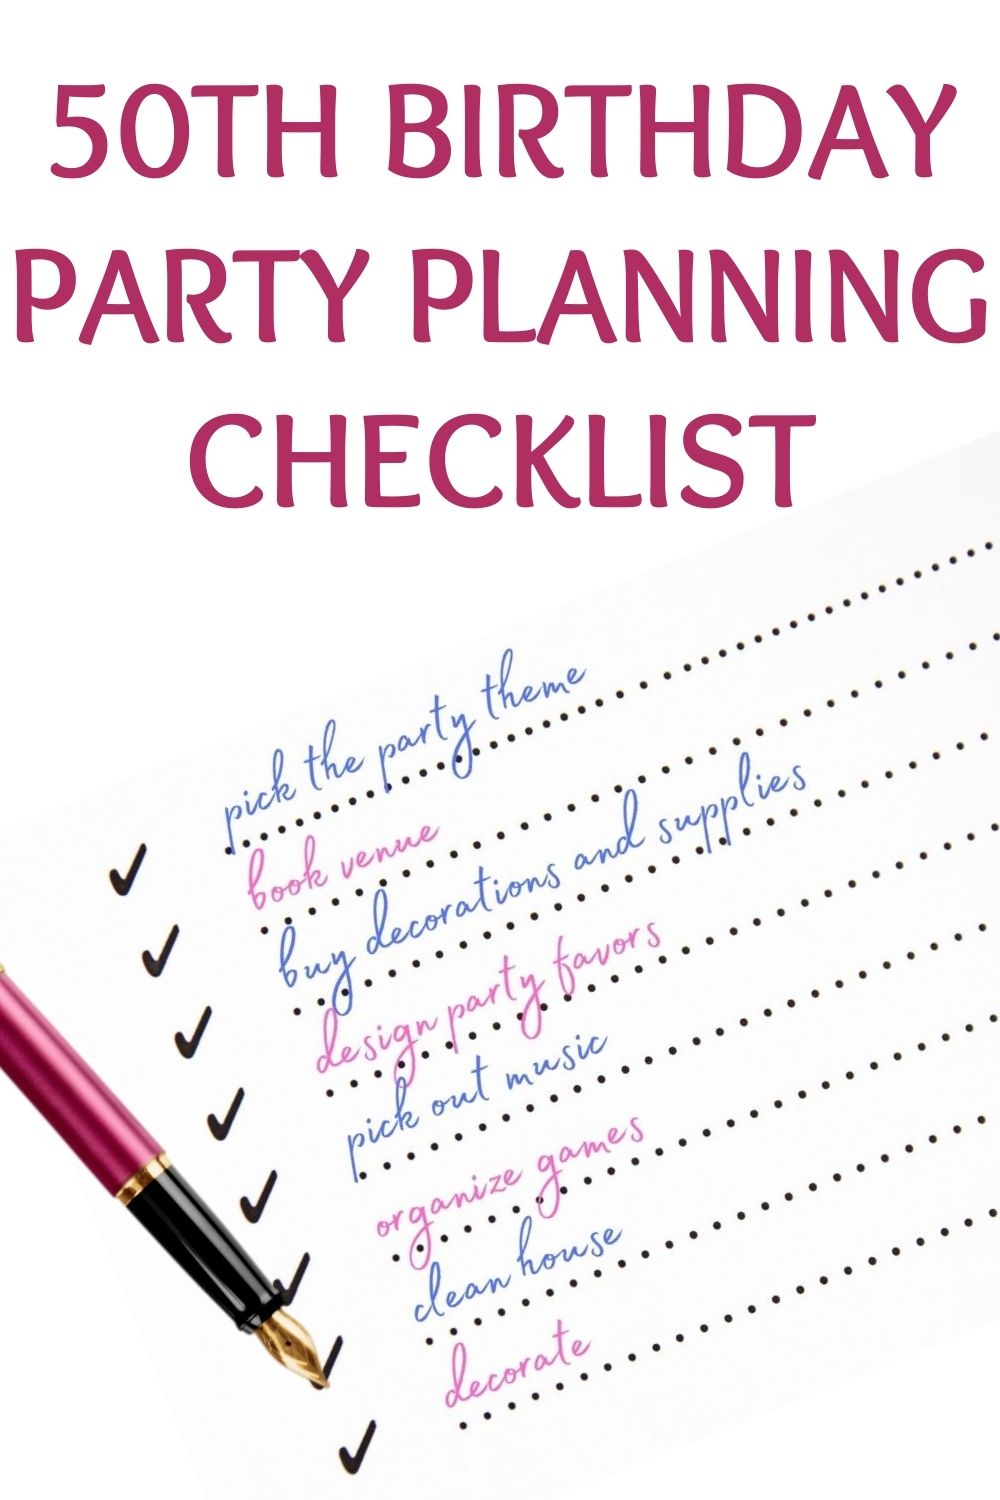 50th birthday party planning checklist